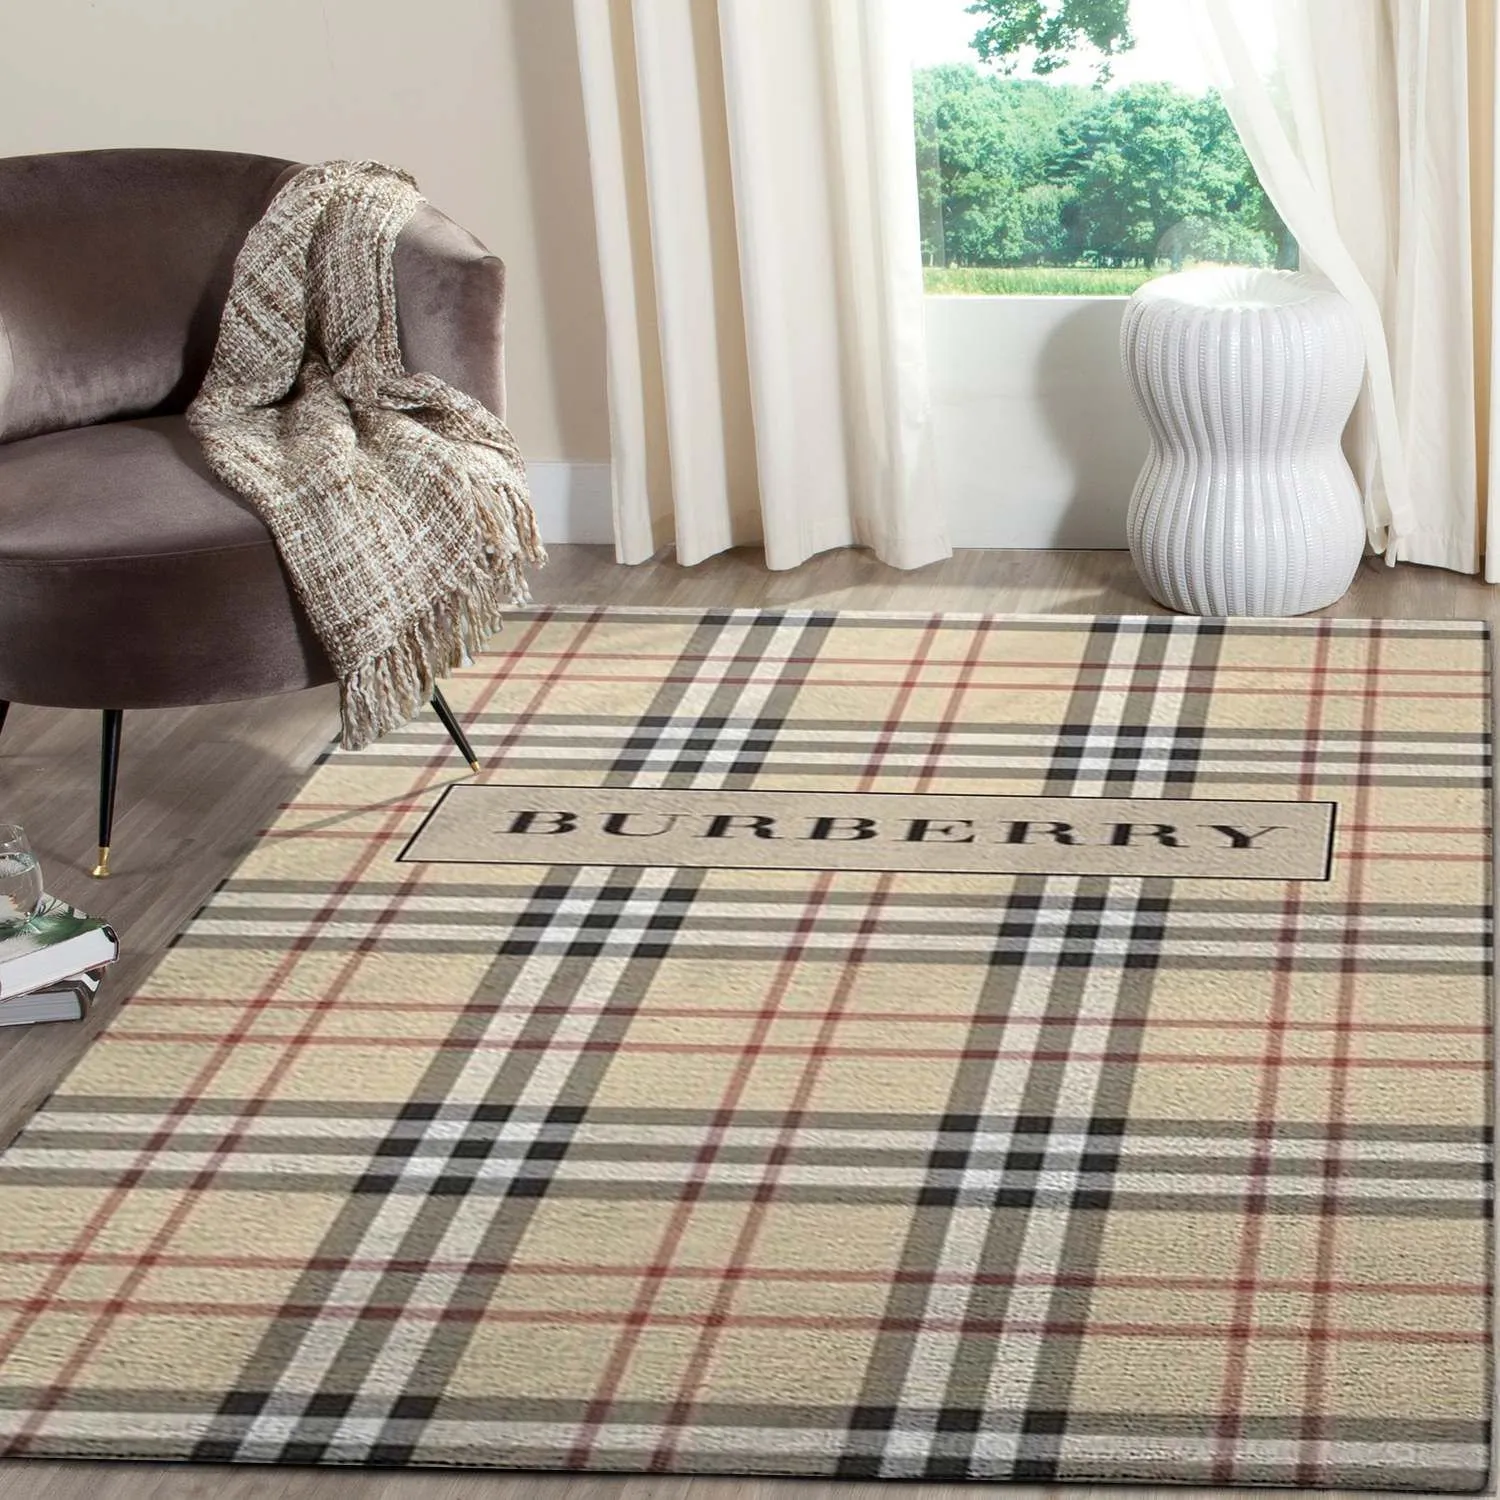 Burberry Rectangle Rug Luxury Area Carpet Door Mat Home Decor Fashion Brand